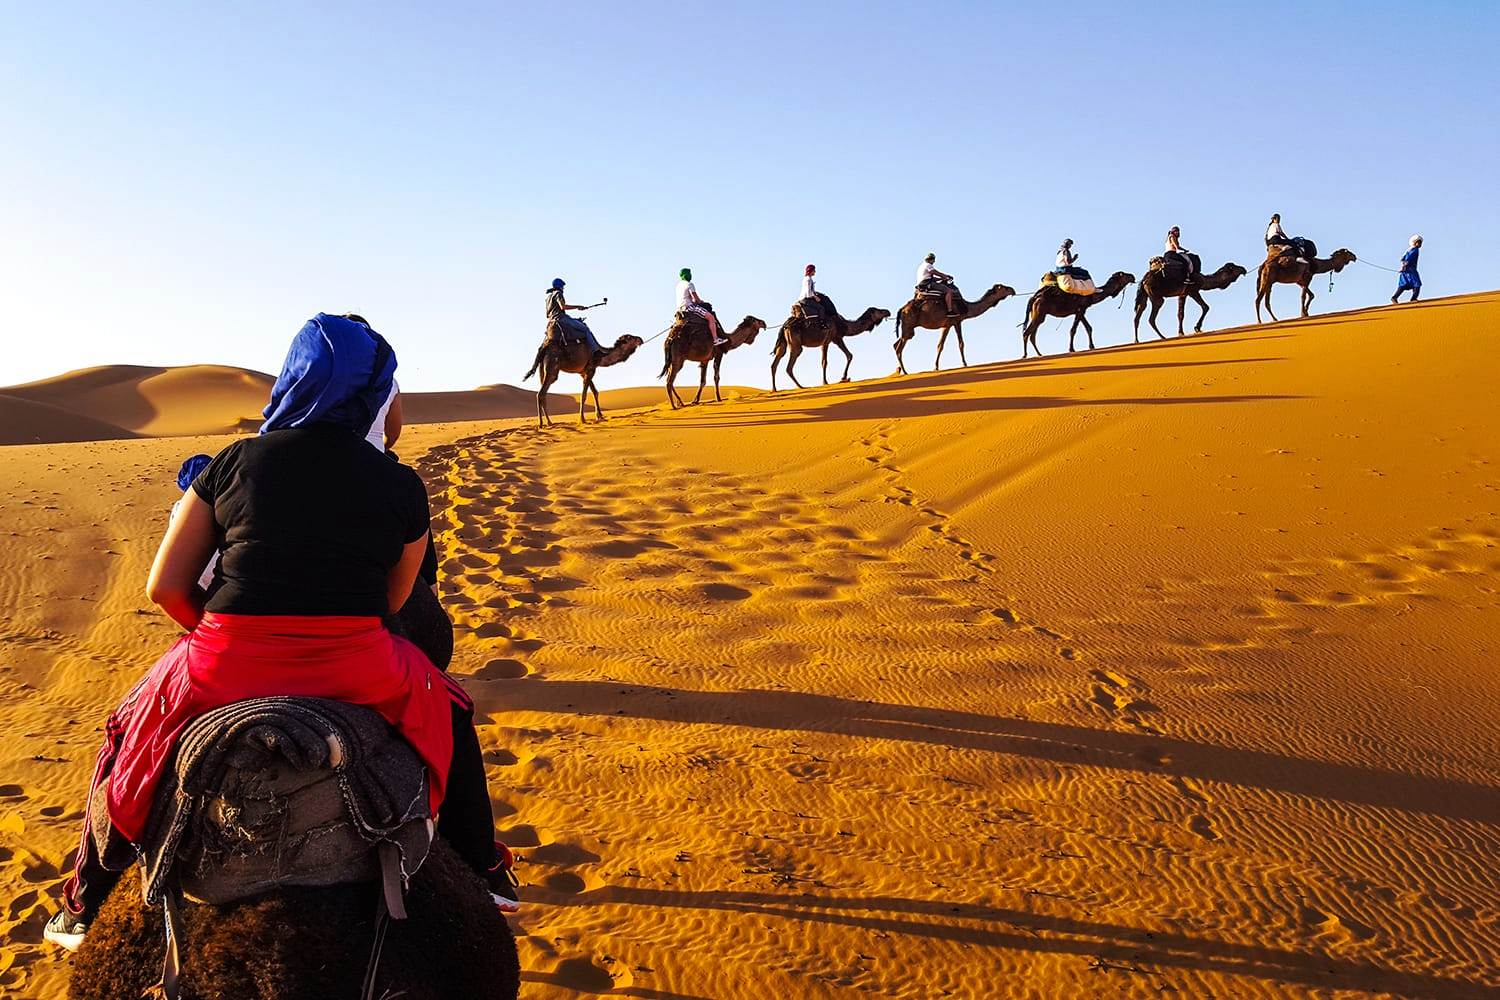 03 days Morocco desert tour to Erg Chebbi dunes from Marrakech